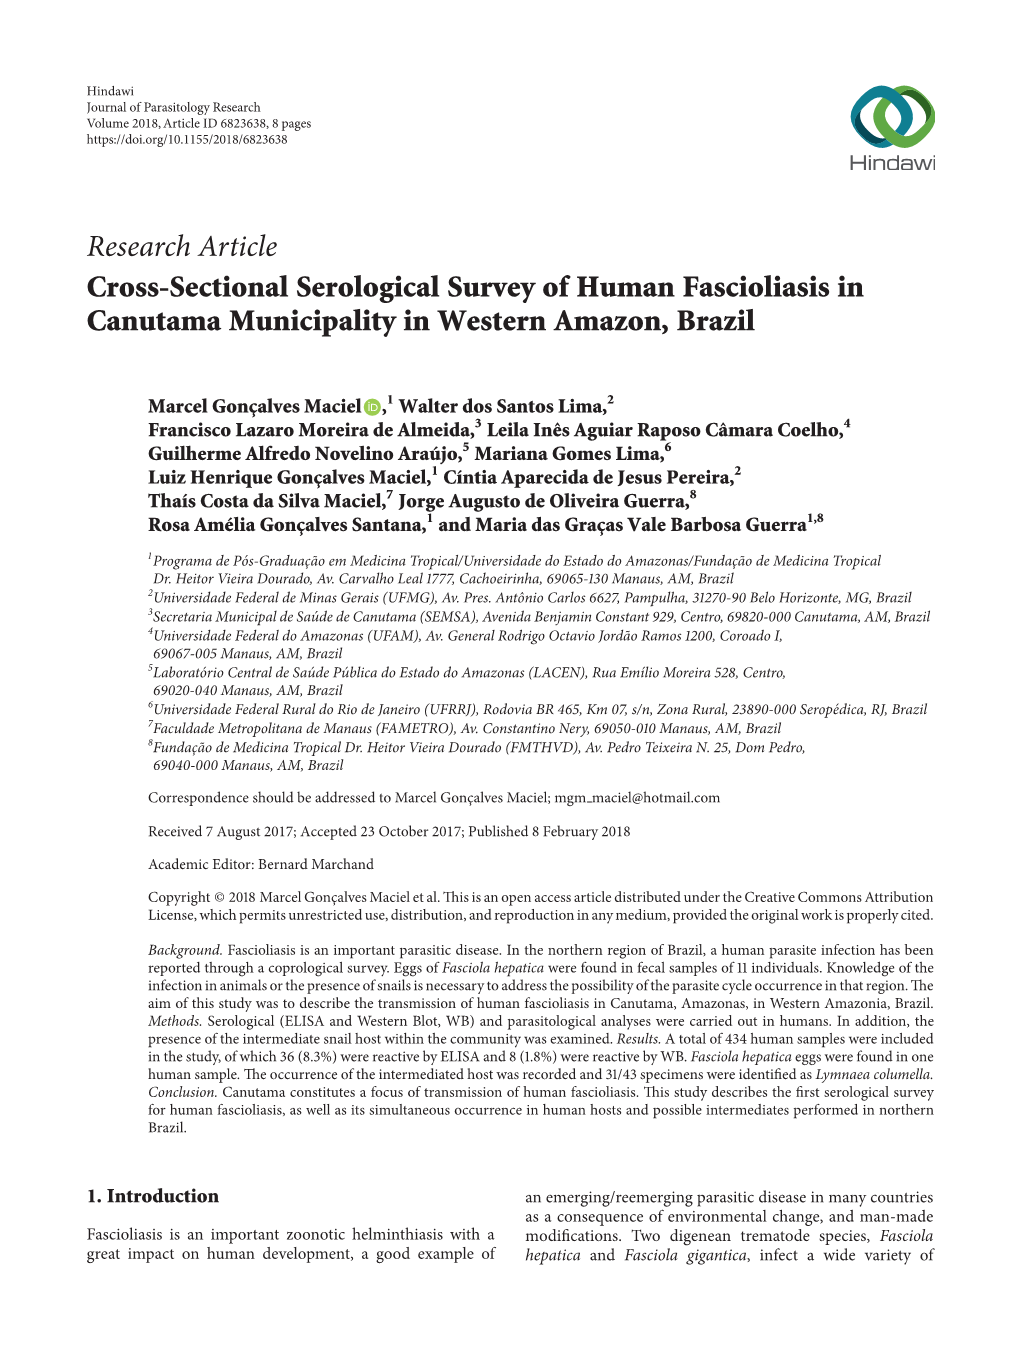 Cross-Sectional Serological Survey of Human Fascioliasis in Canutama Municipality in Western Amazon, Brazil